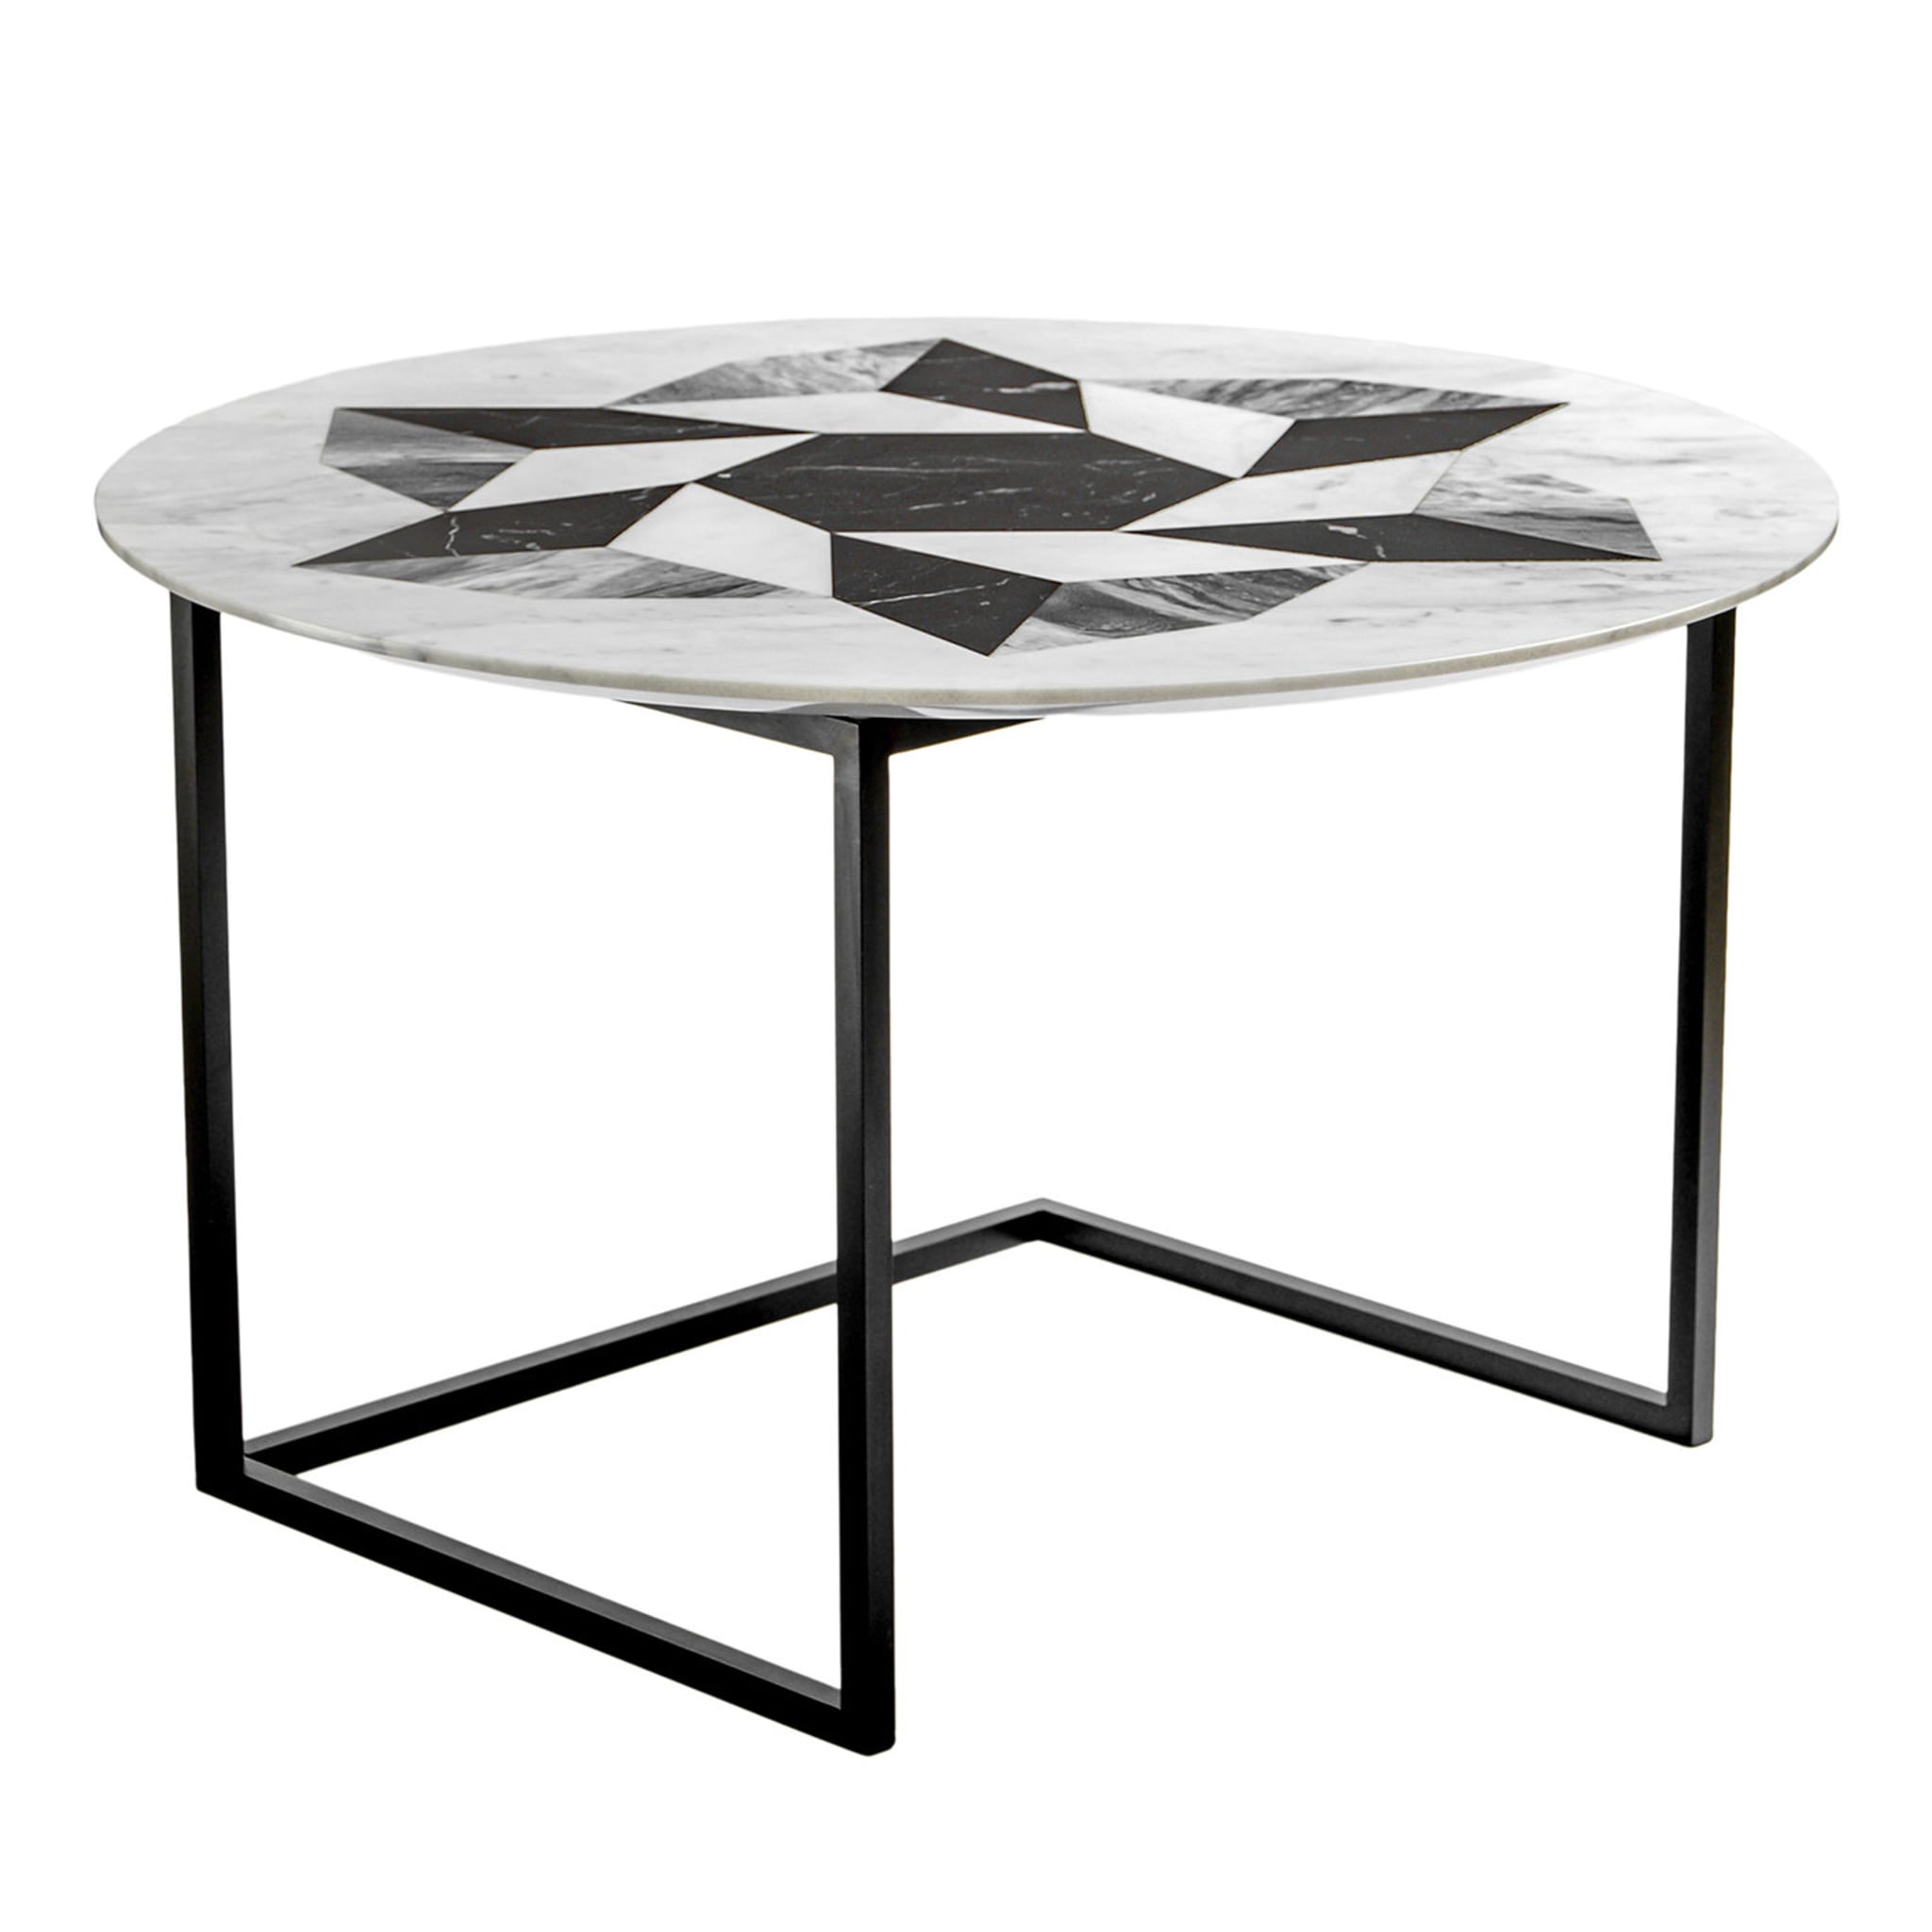 Esopo Coffee Table with Geometric Wheel by Antonio Saporito - Main view